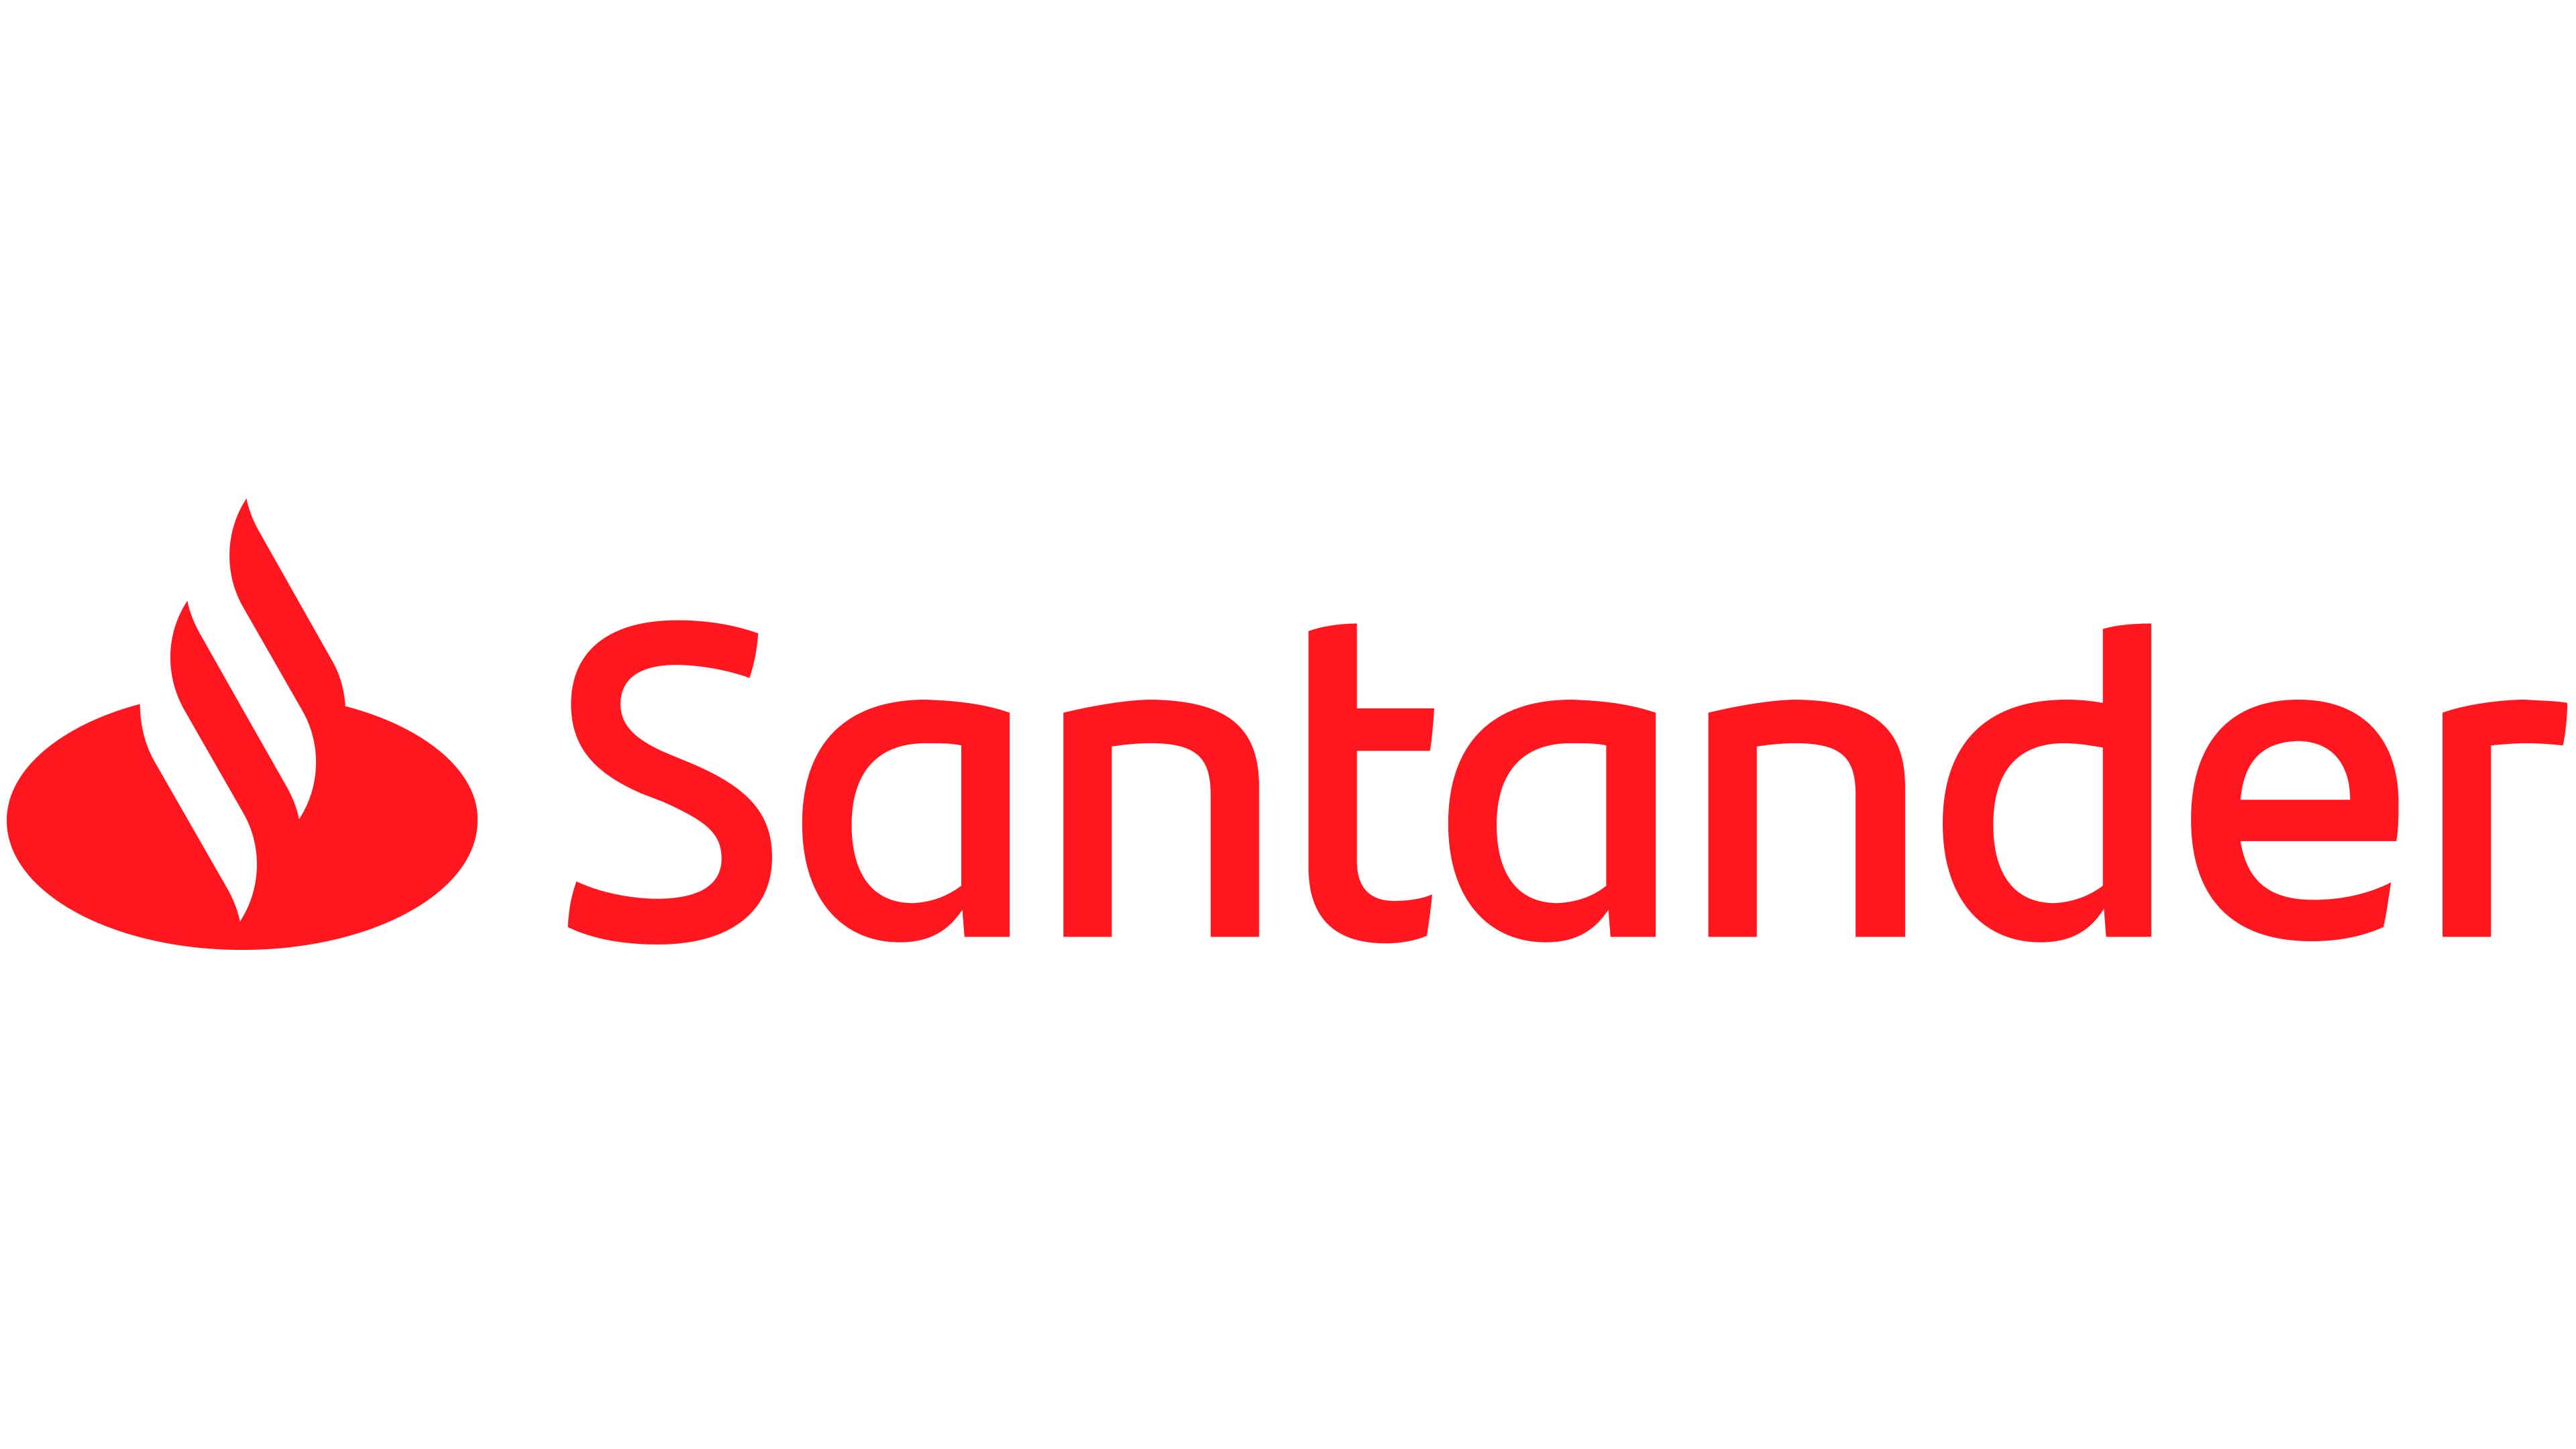 Vale a pena investir com o Banco Santander? Fonte: Santander.